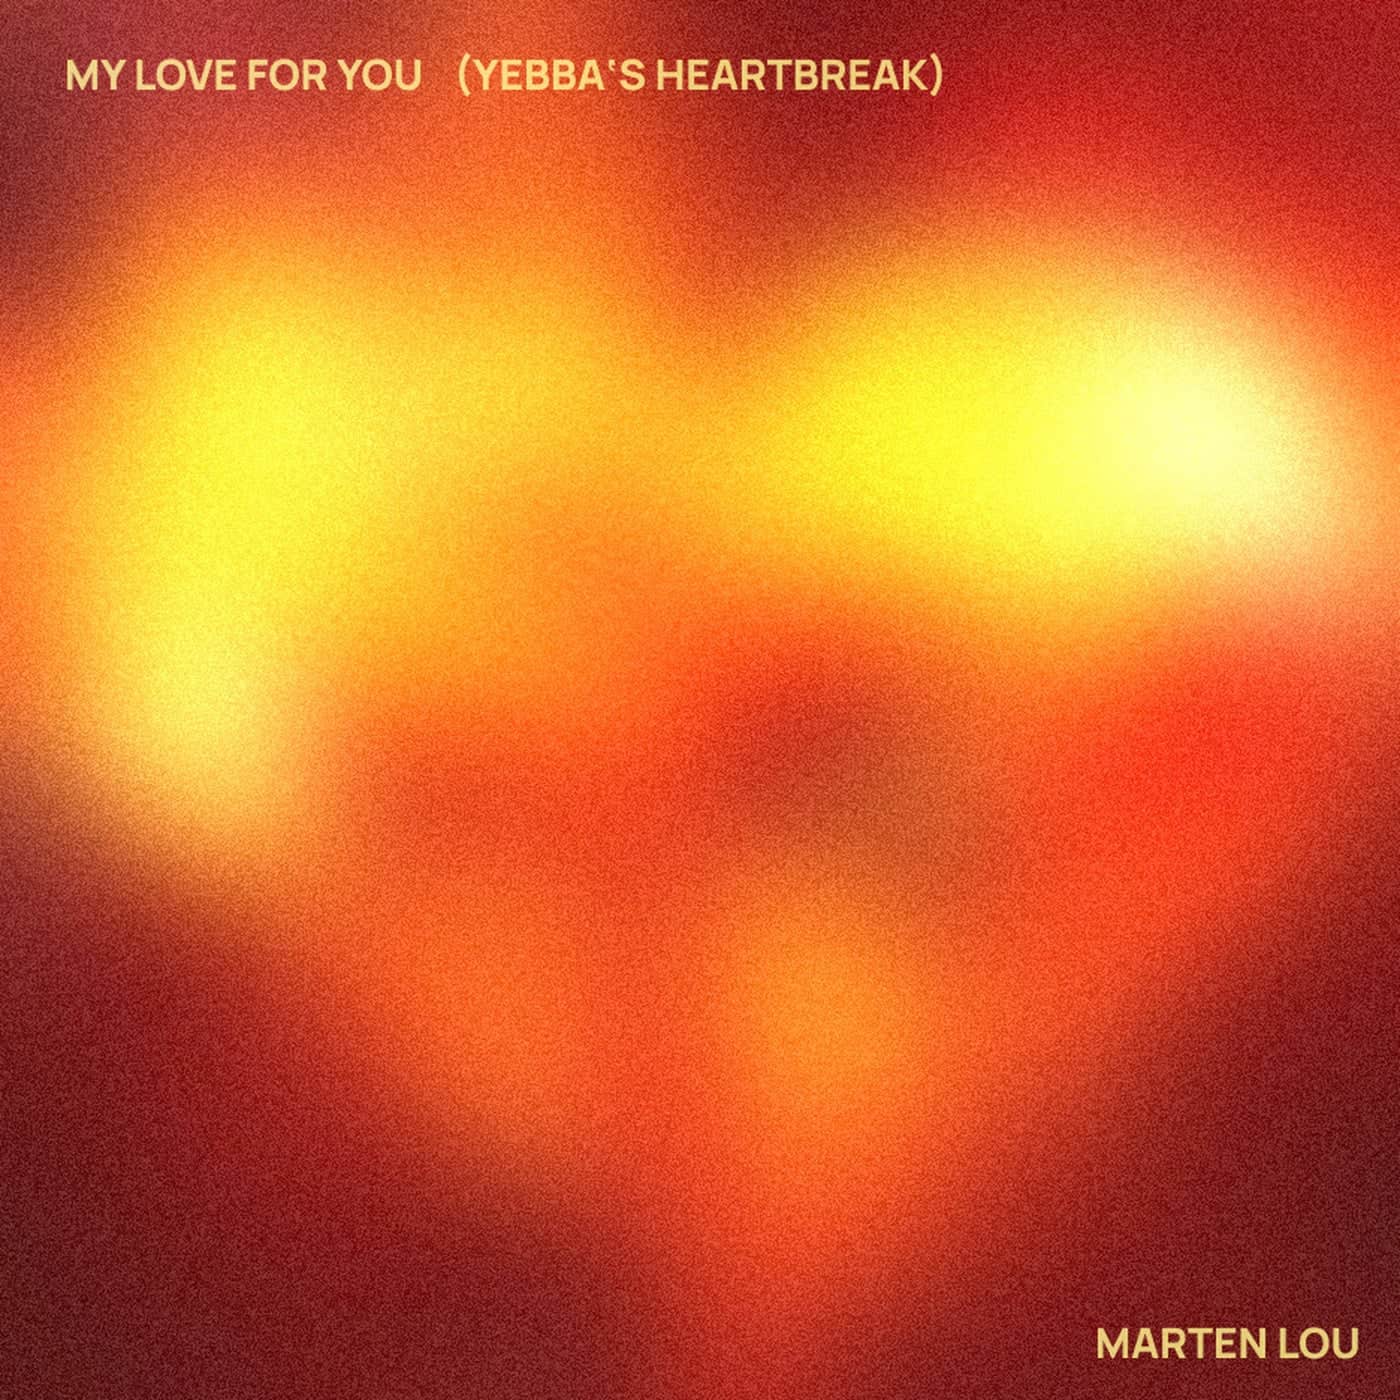 Download Marten Lou - My Love For You (Yebba's Heartbreak) on Electrobuzz